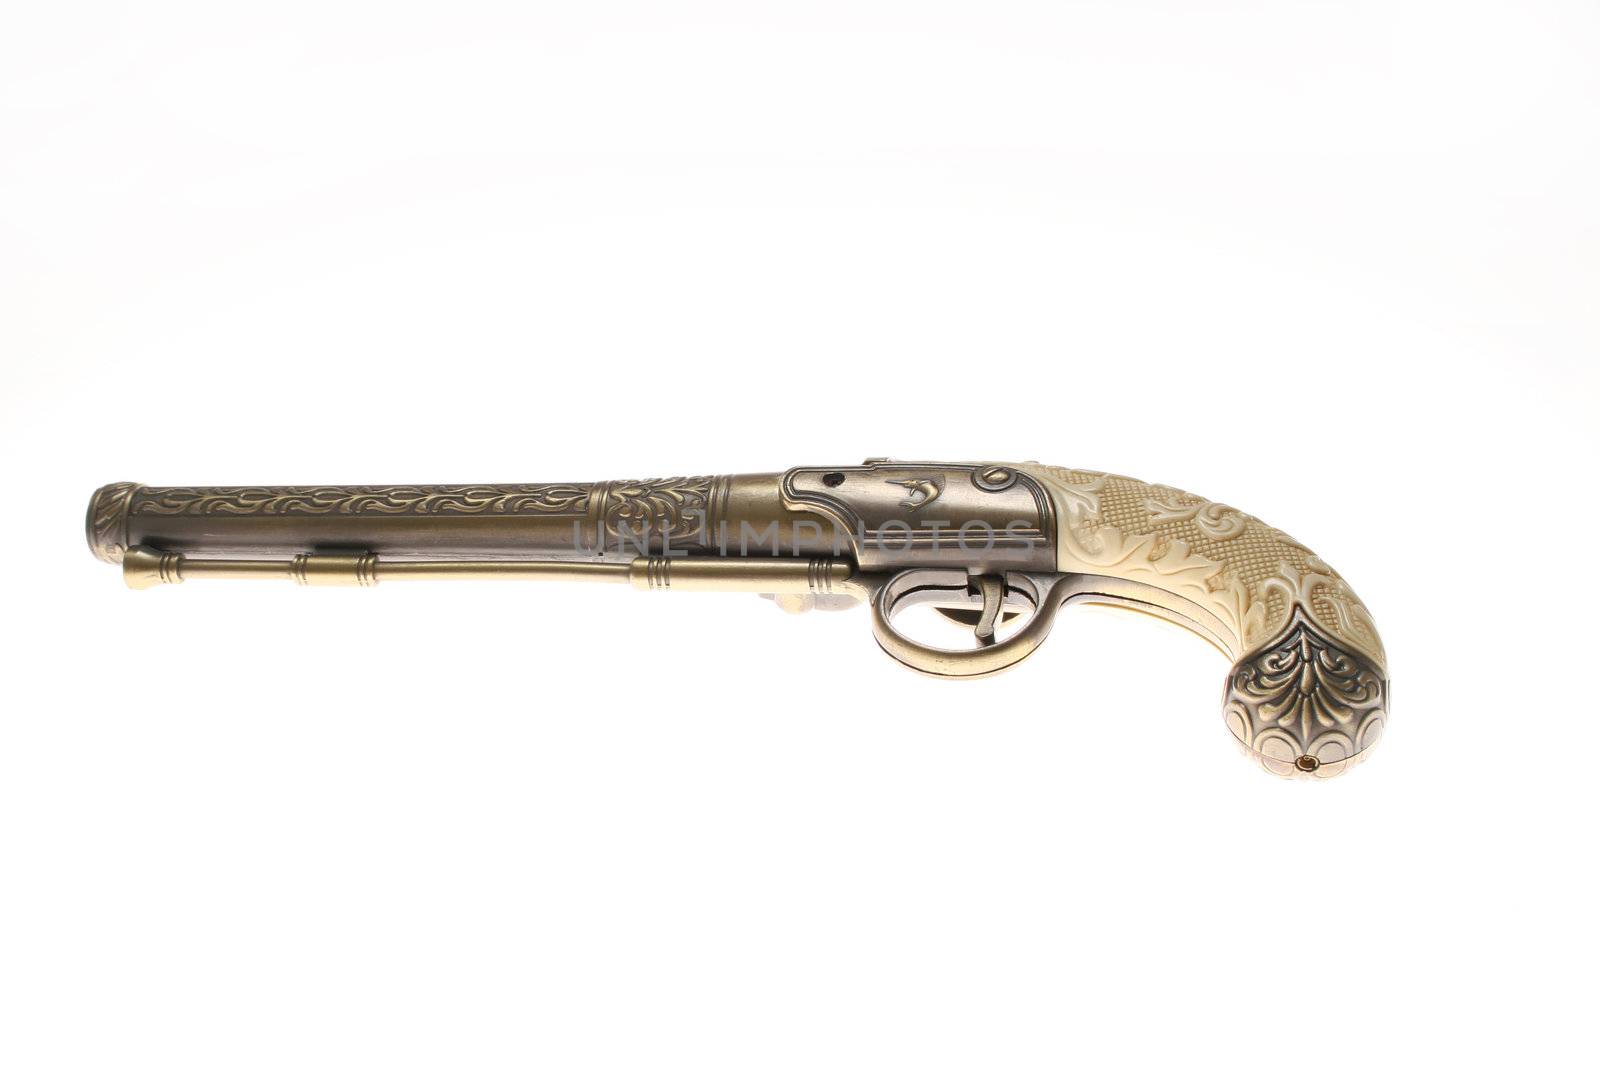 Antique gun, isolated on white